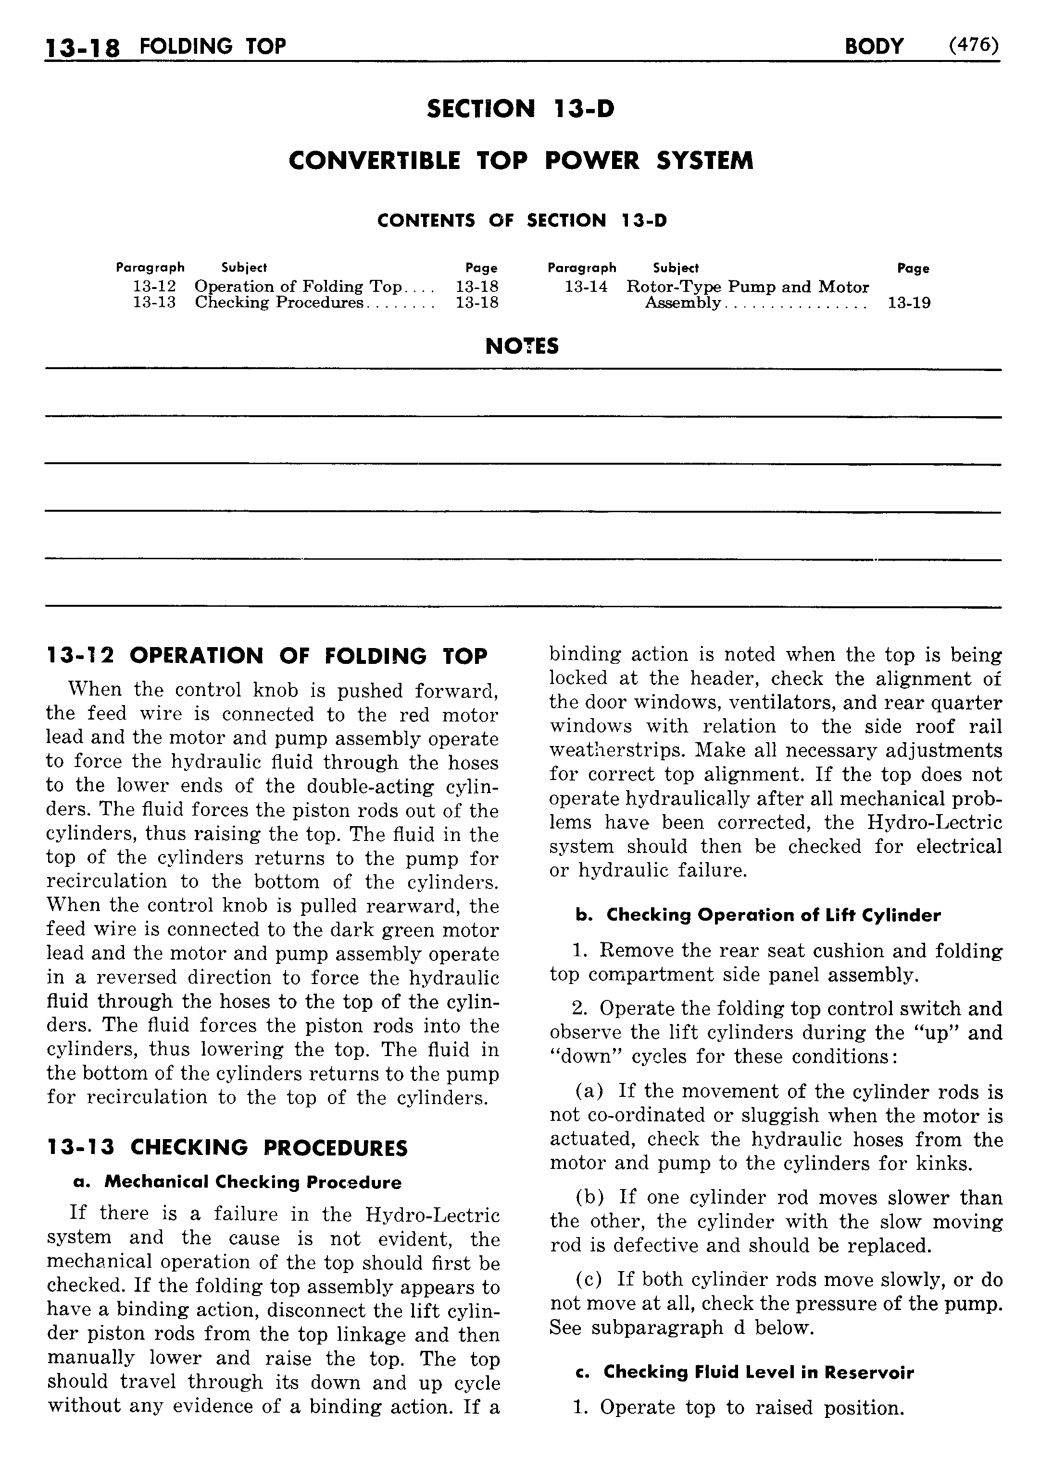 n_14 1956 Buick Shop Manual - Body-018-018.jpg